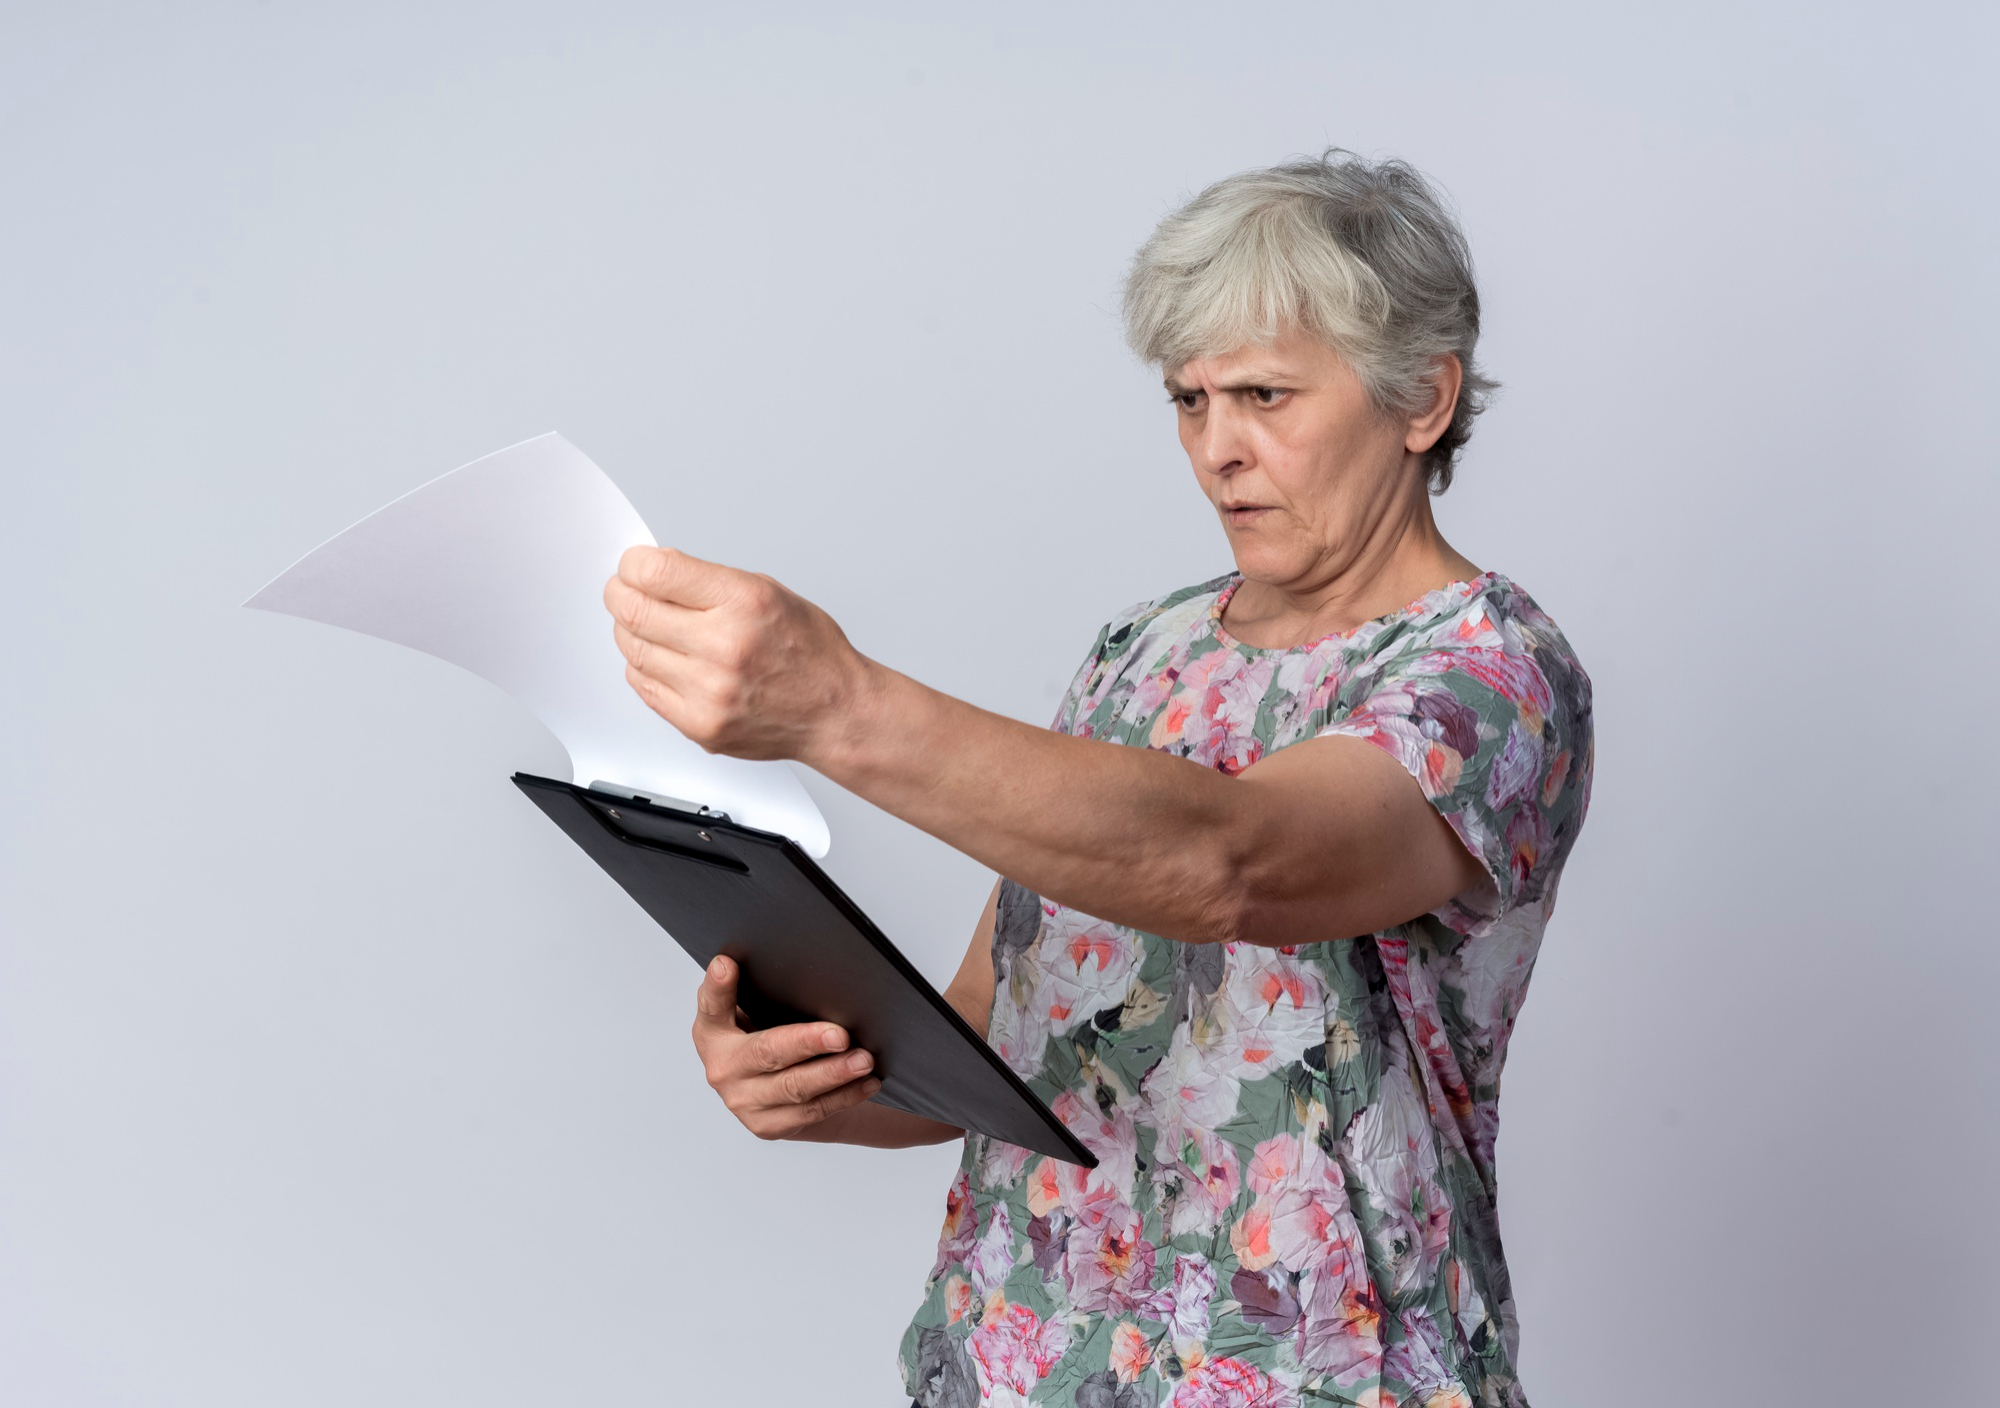 An upset older woman reading some paperwork | Source: Pexels